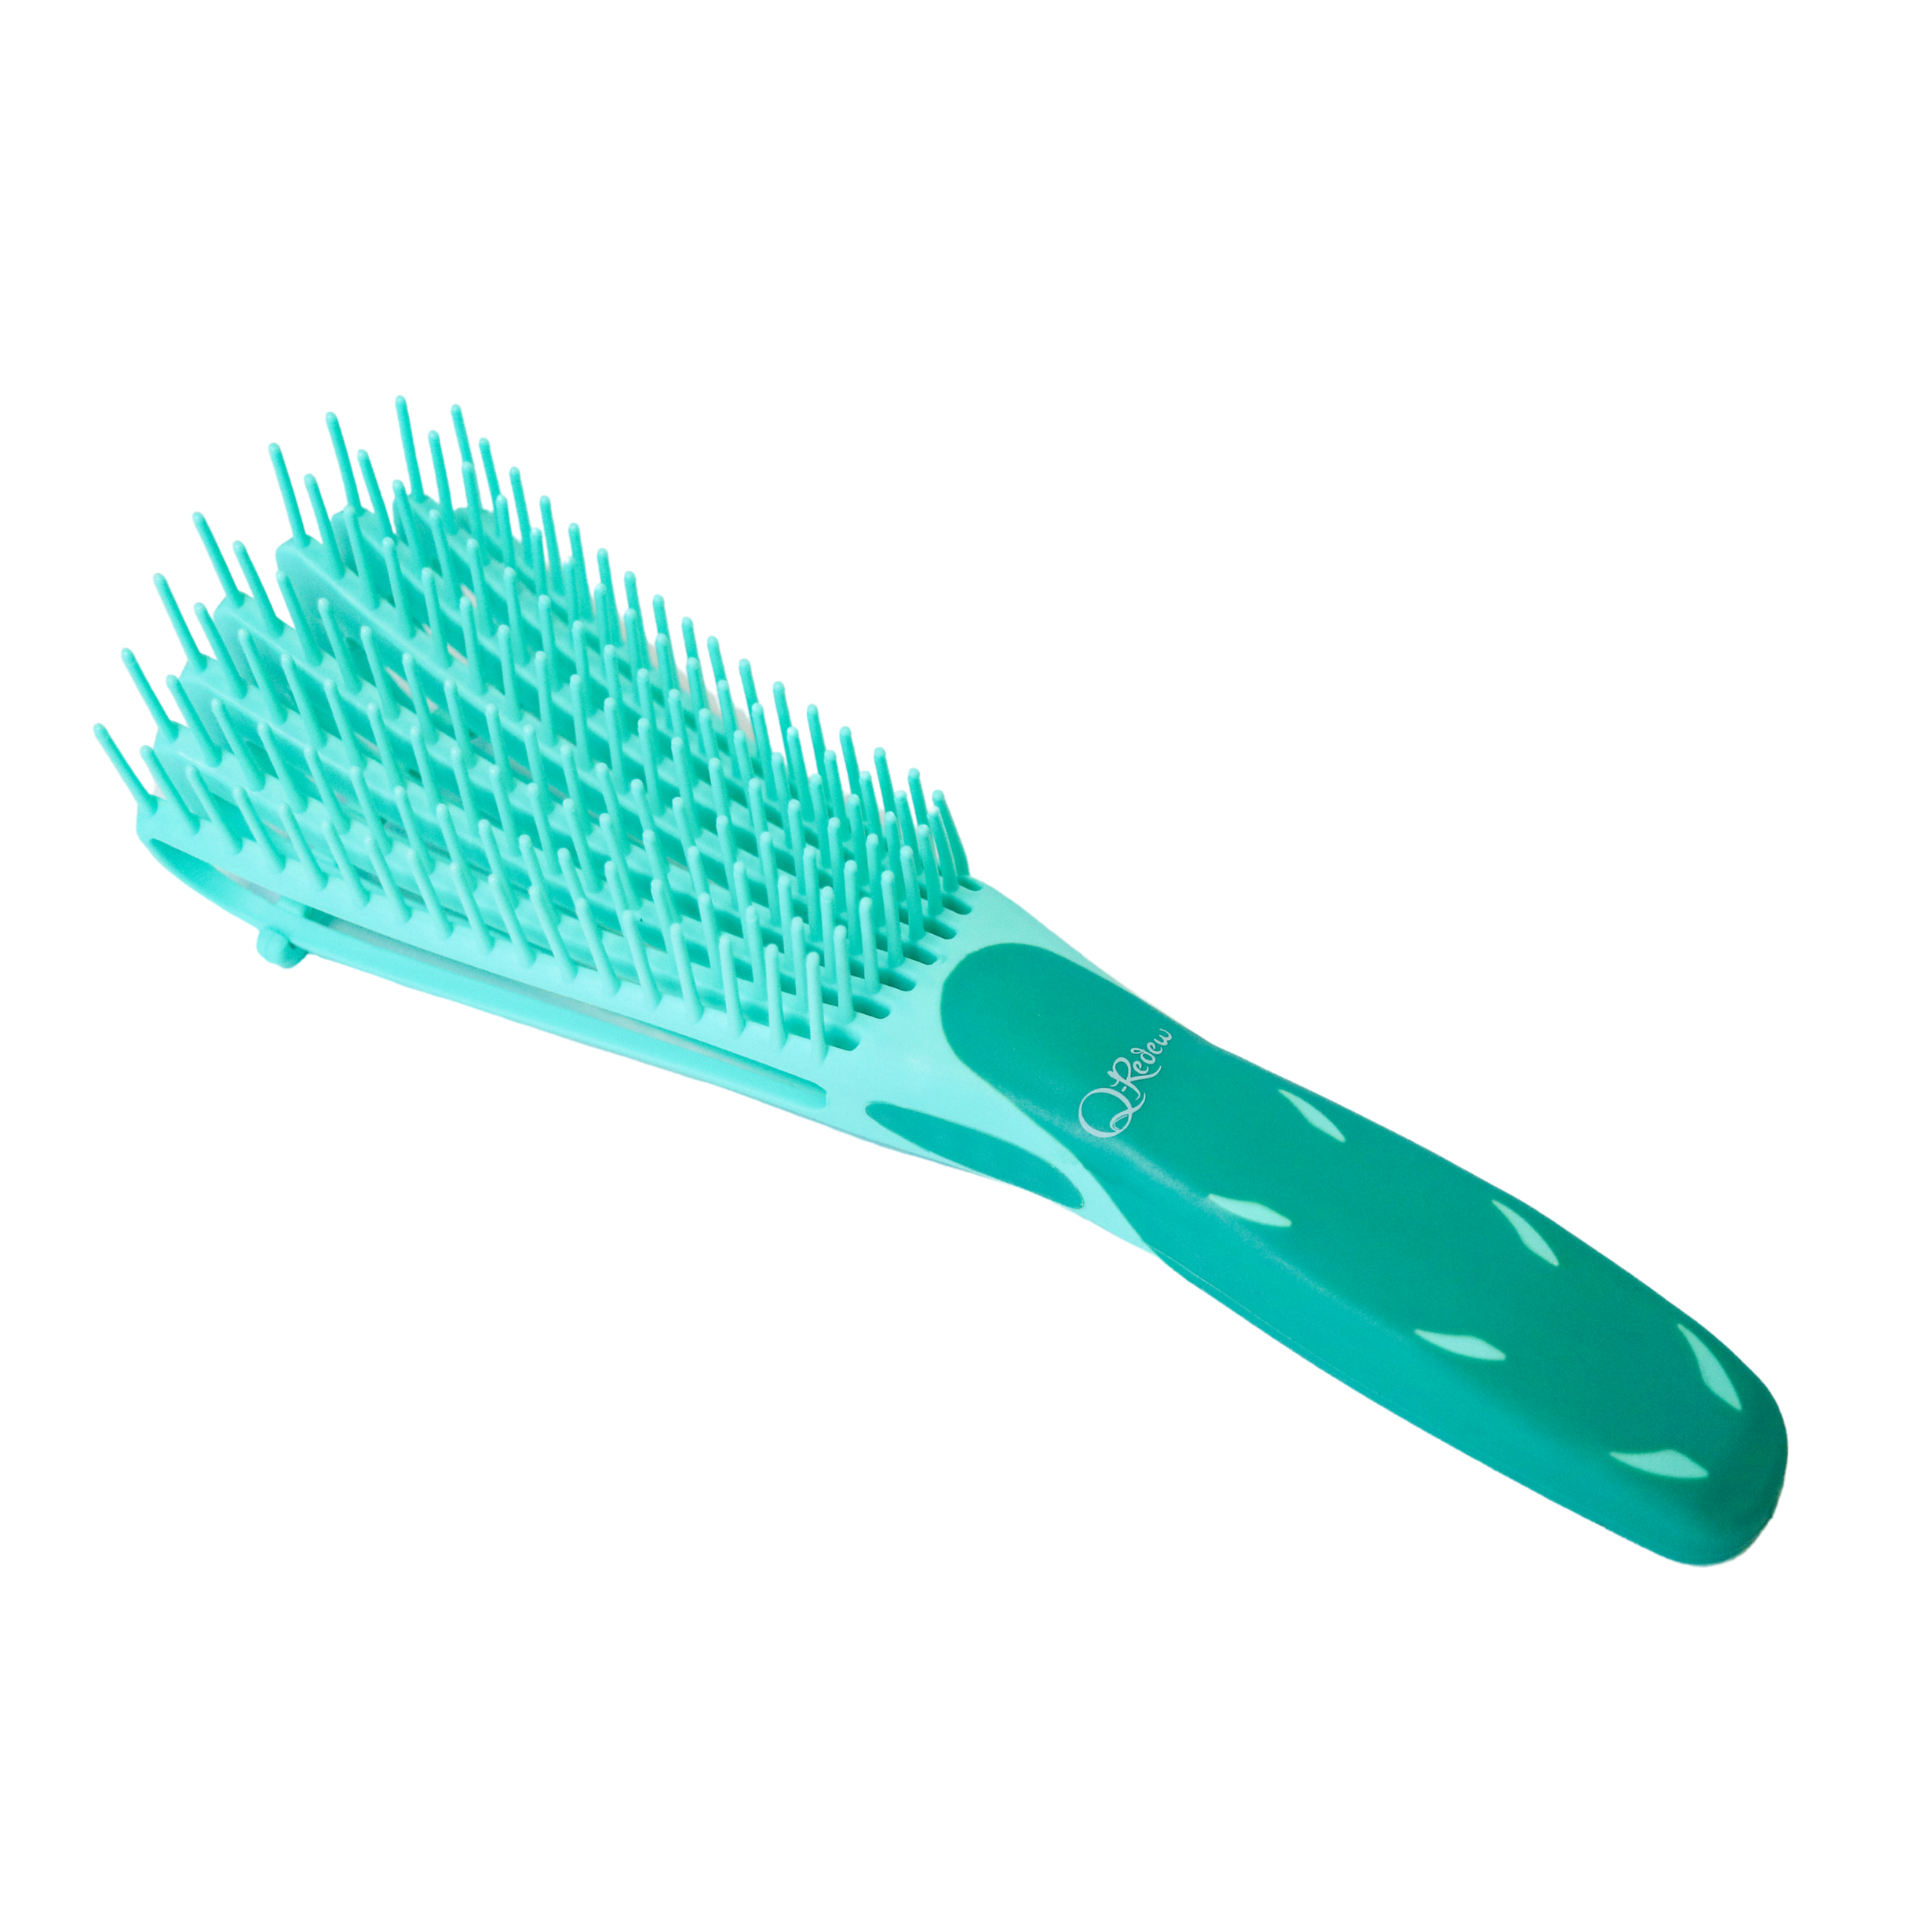 Q-Redew Detangling Brush for Natural Curly Hair